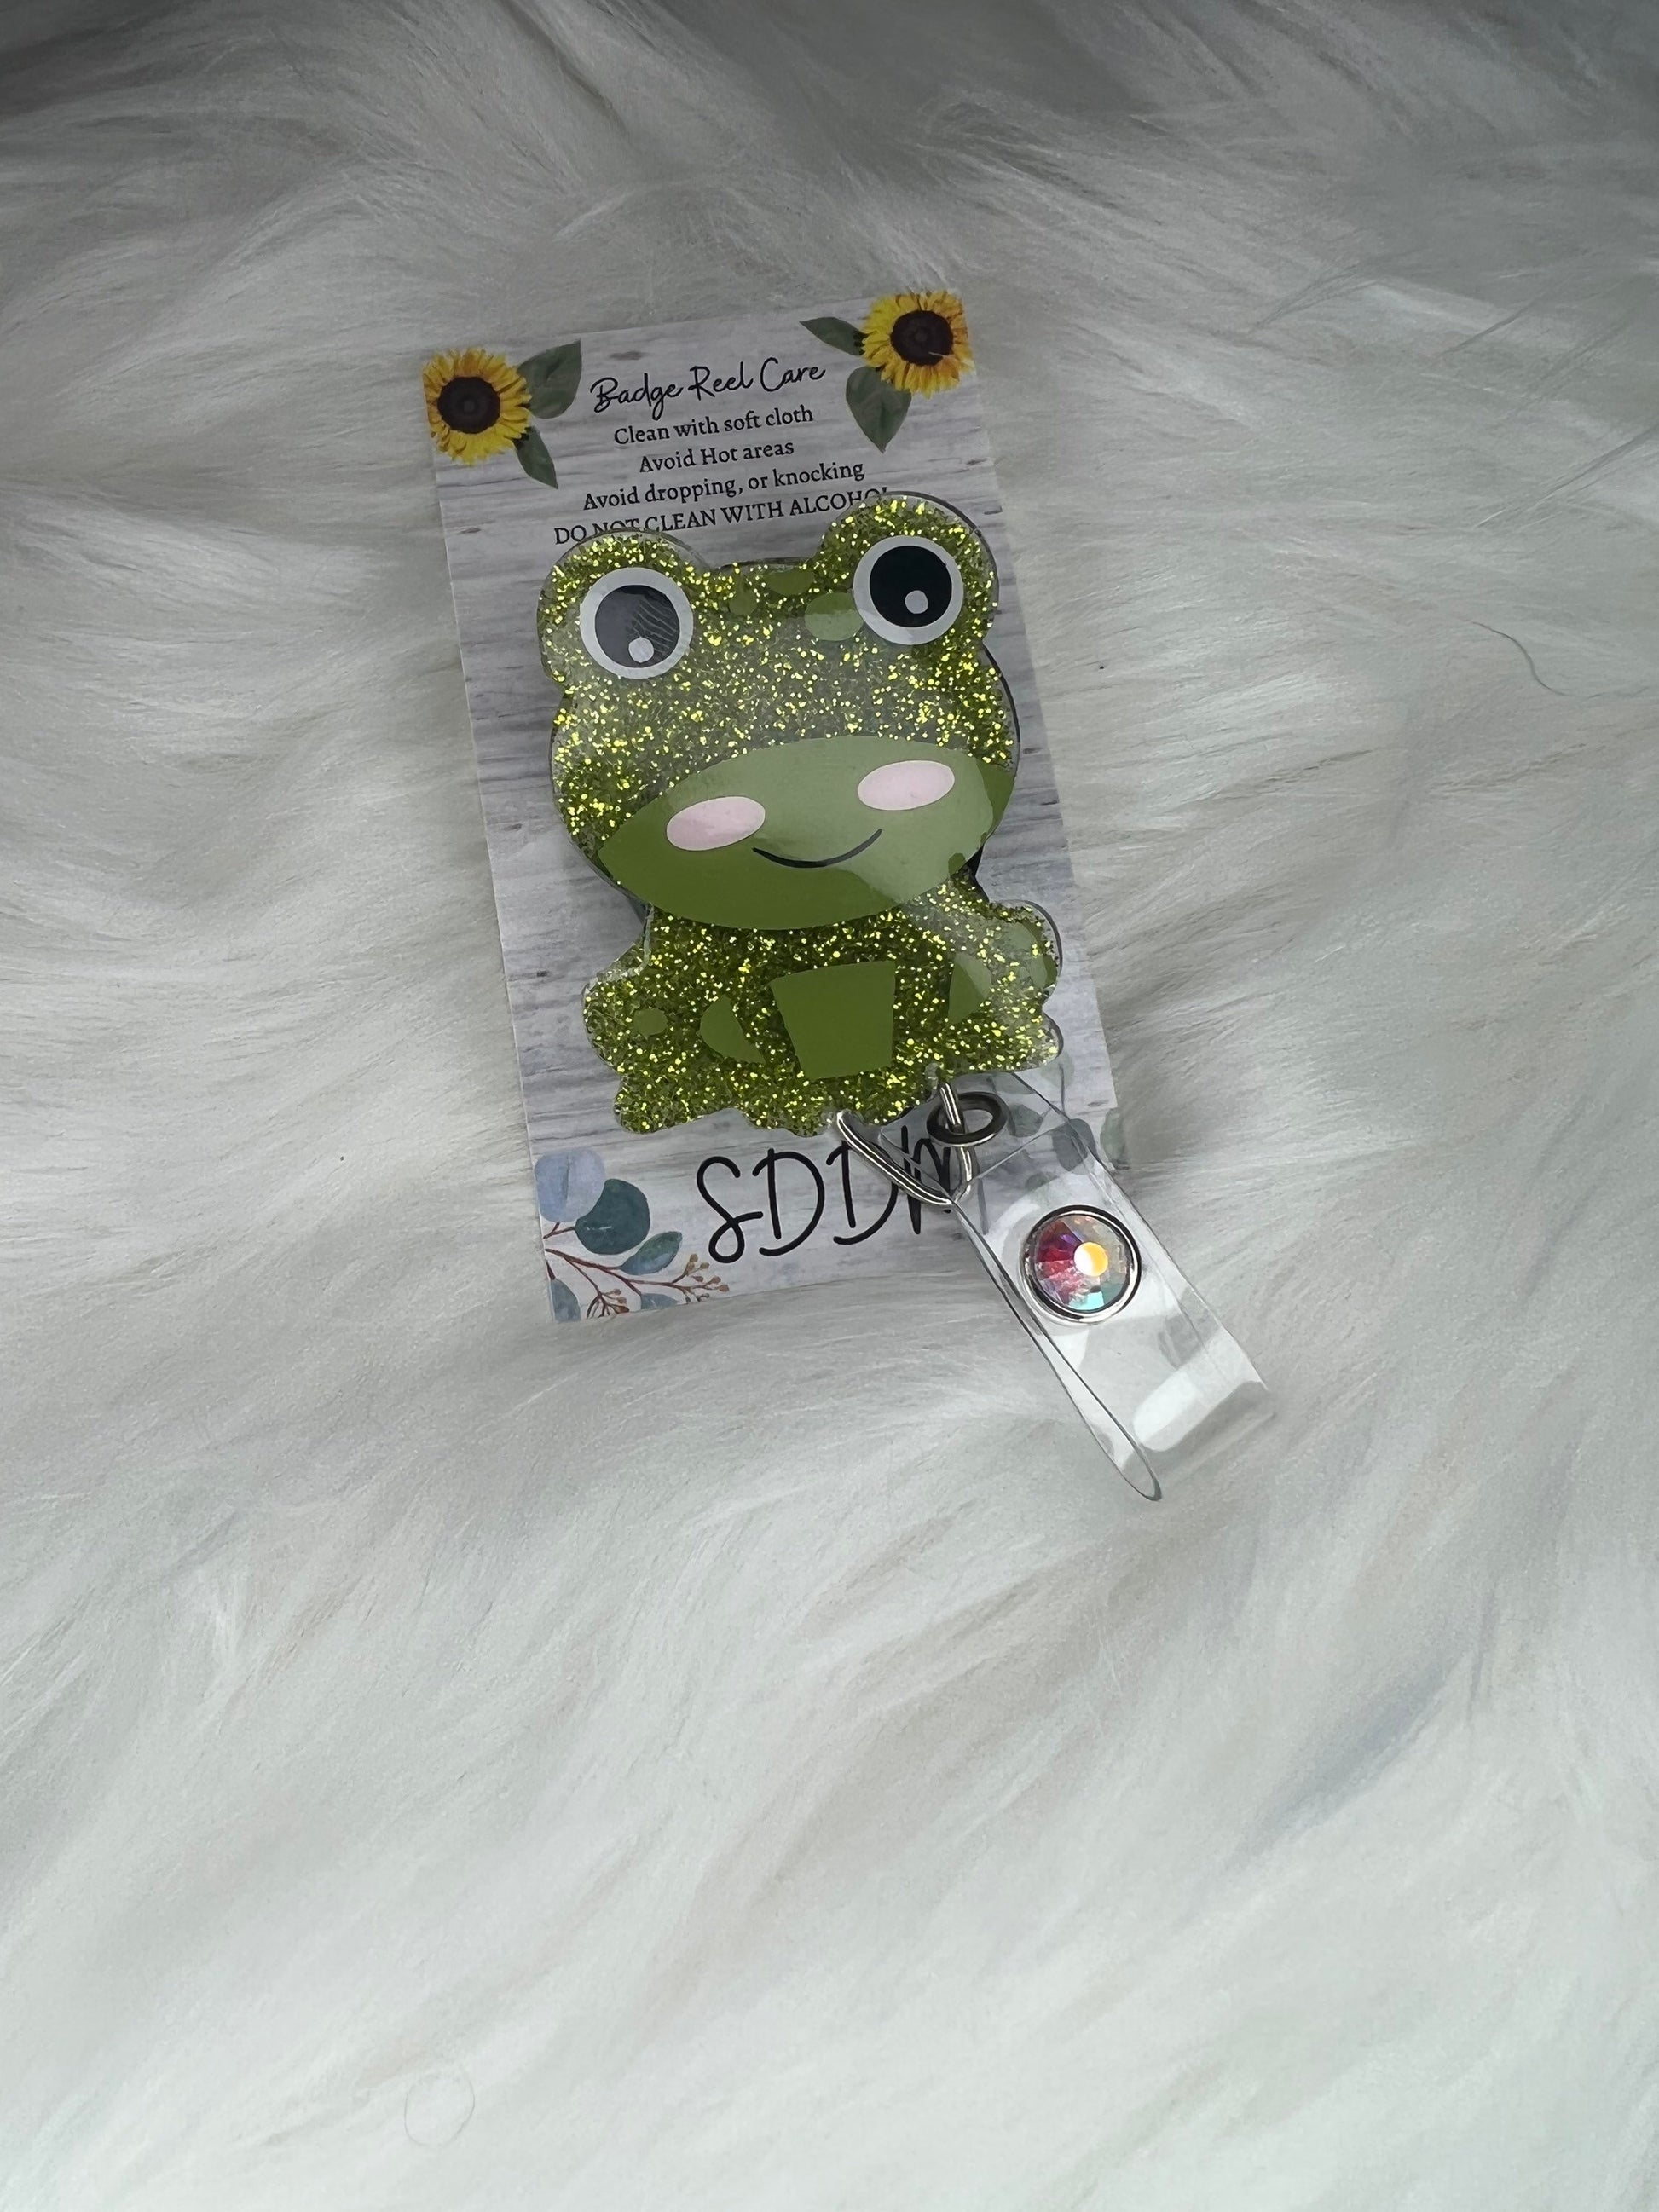 Cute frog badge reel-Animal Badge Reel-Green-Nurse-CNA-Office gifts